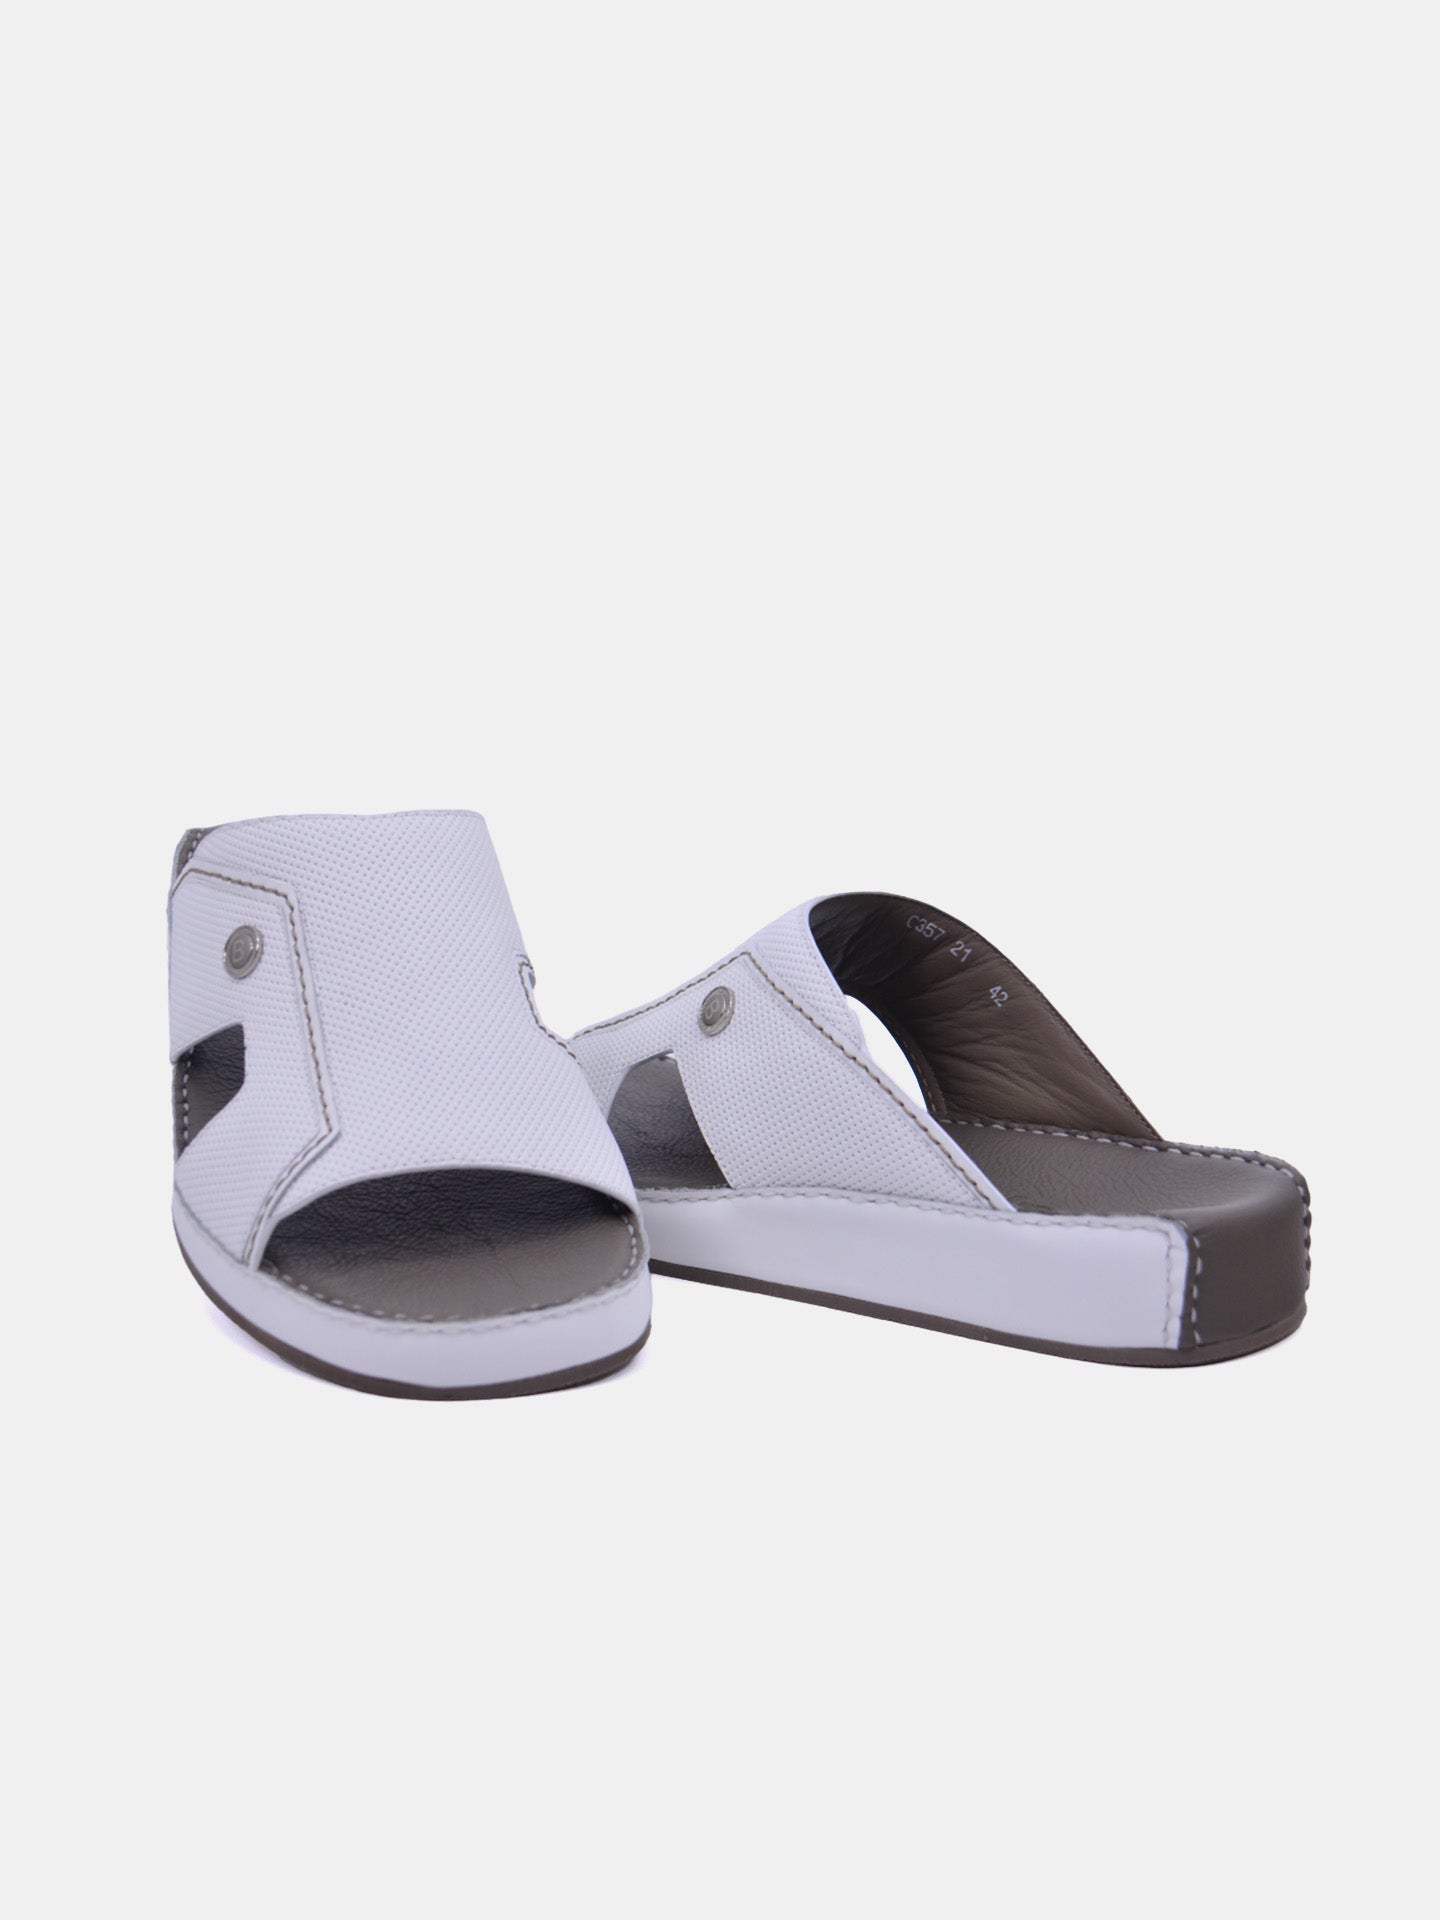 Barjeel Uno C357-21 Men's Arabic Sandals #color_White